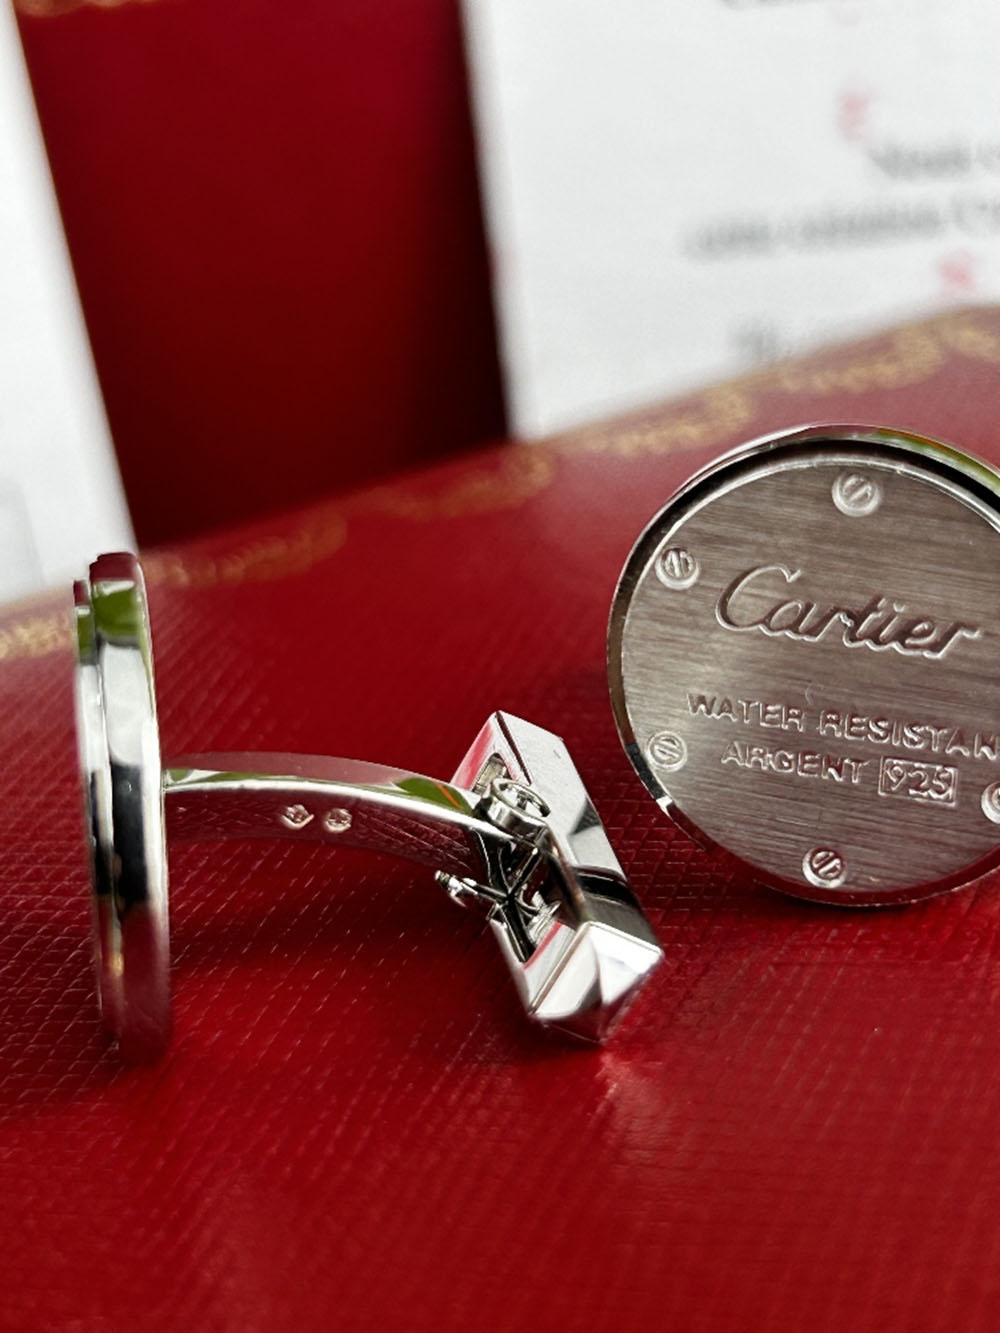 Cartier Paris Water Resistant 925 Silver Cufflinks - Image 4 of 7